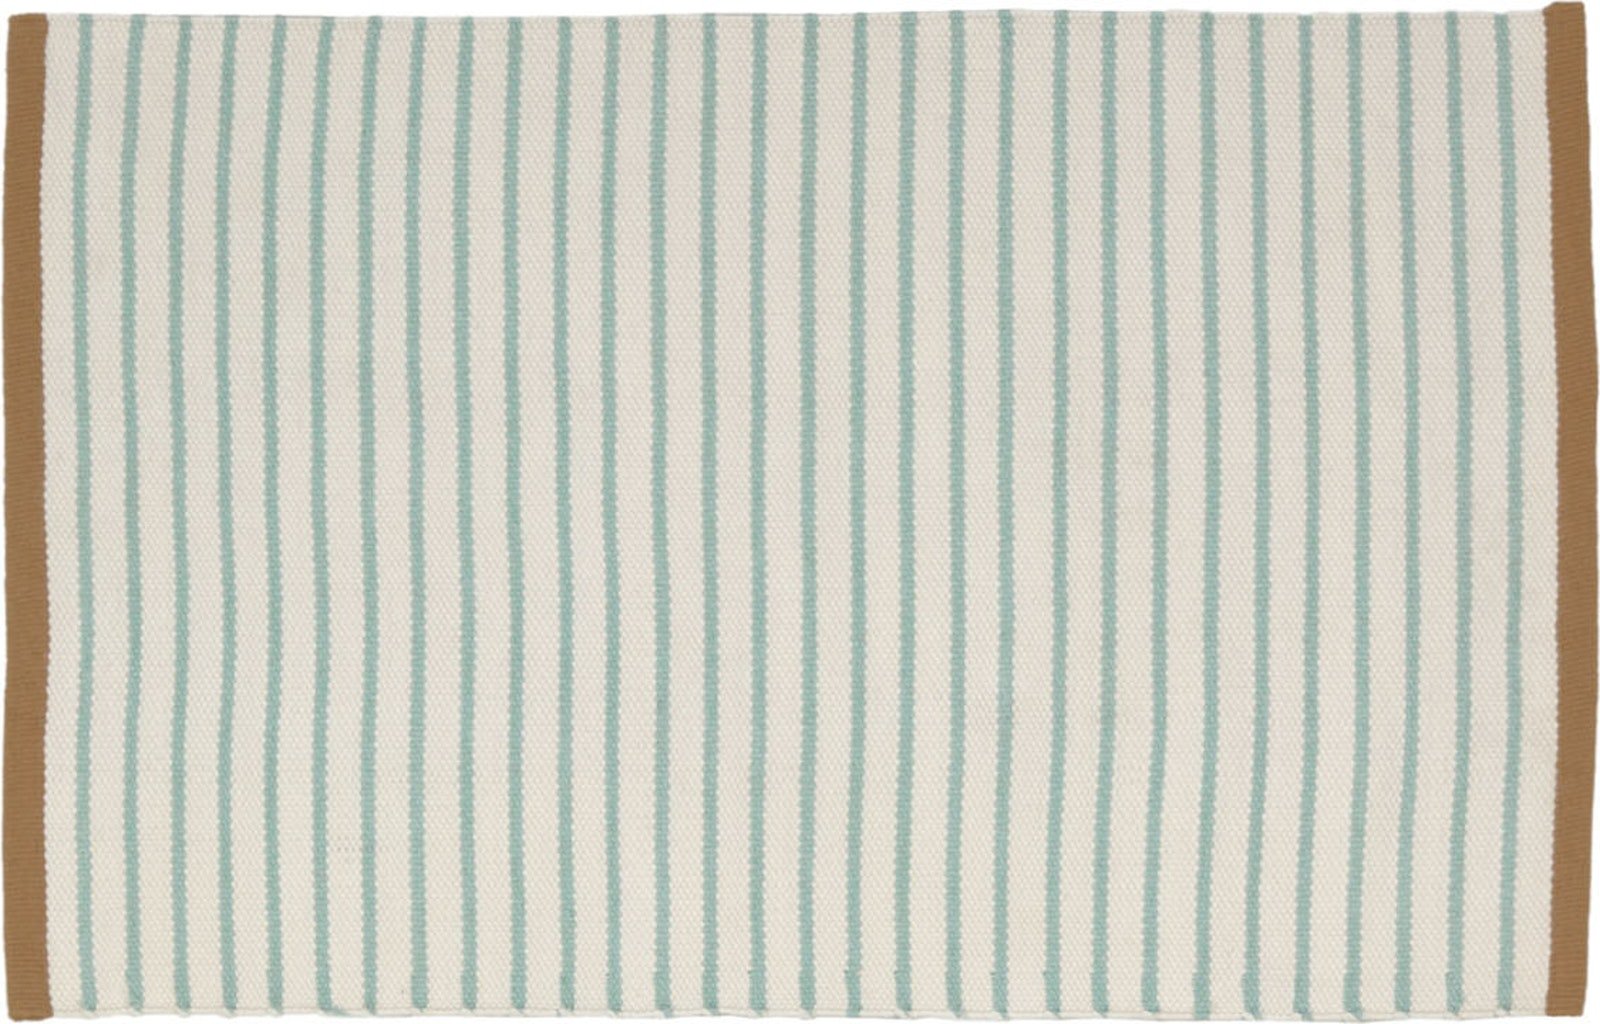 Catiana, Tæppe, moderne, nordisk, stof by LaForma (H: 1 cm. B: 60 cm. L: 90 cm., Grå/Grøn)